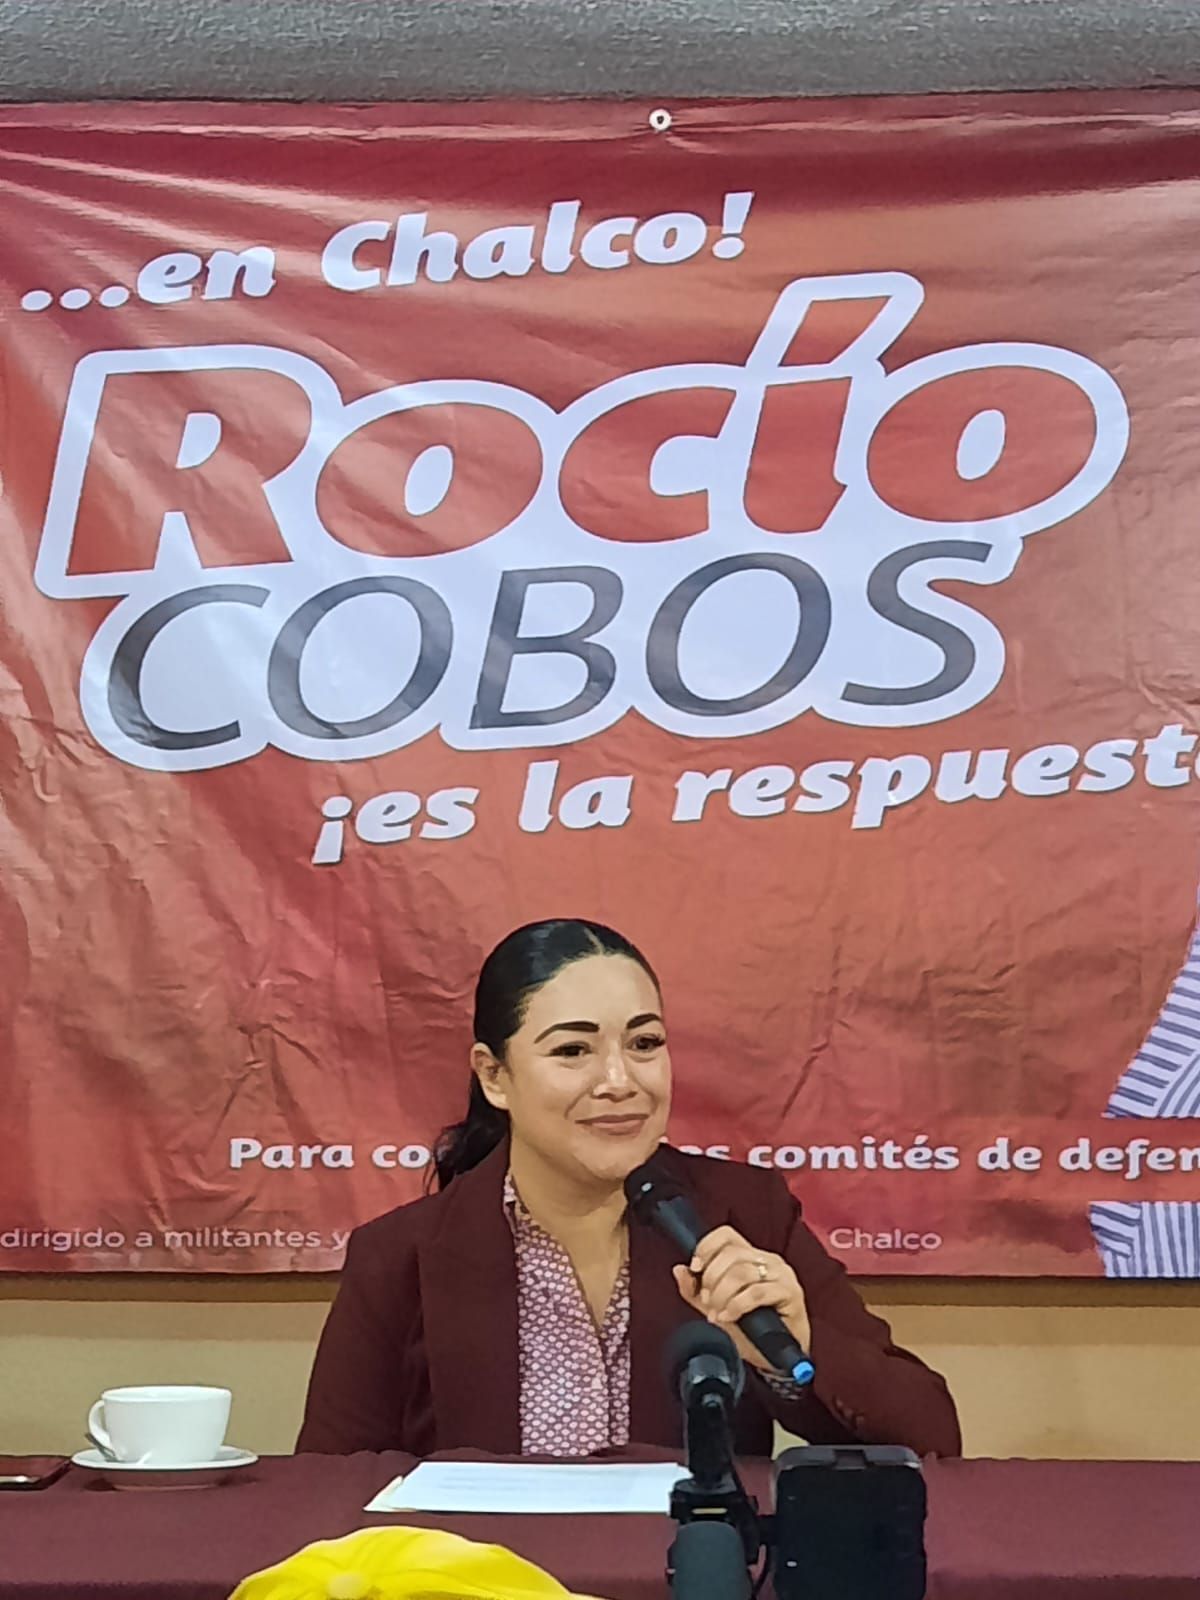 Luego de Muchos Años de Trabajo Partidista, Rocío Cobos Urióstegui Aspira a ser Alcaldesa de Chalco por MORENA